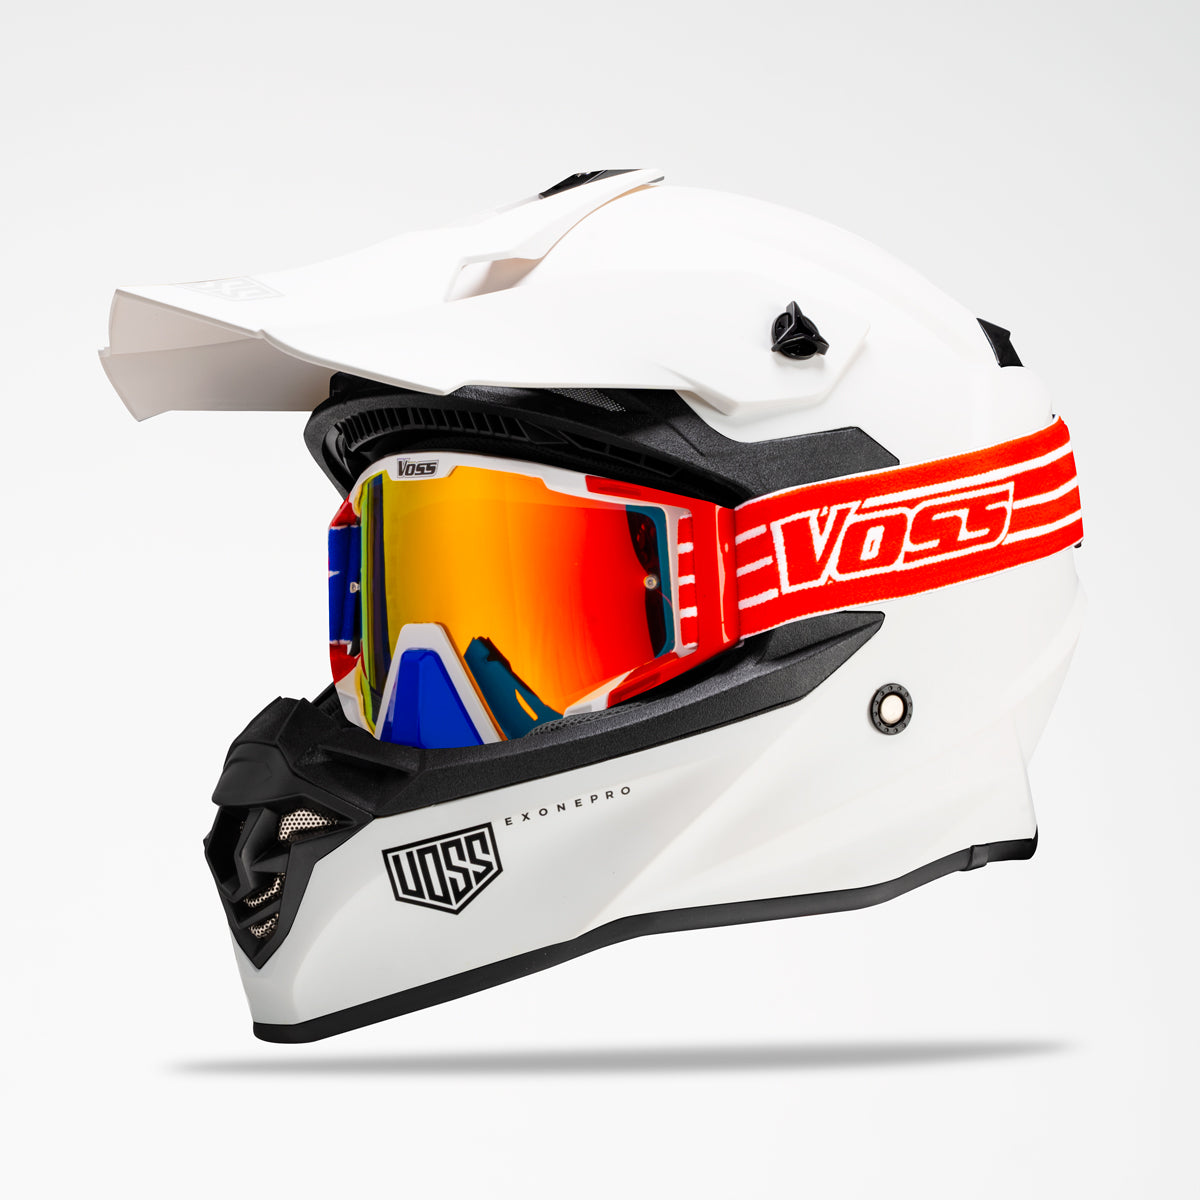 VOSS 801 X1 PRO DIRT WHITEOUT HELMET - Voss Helmets